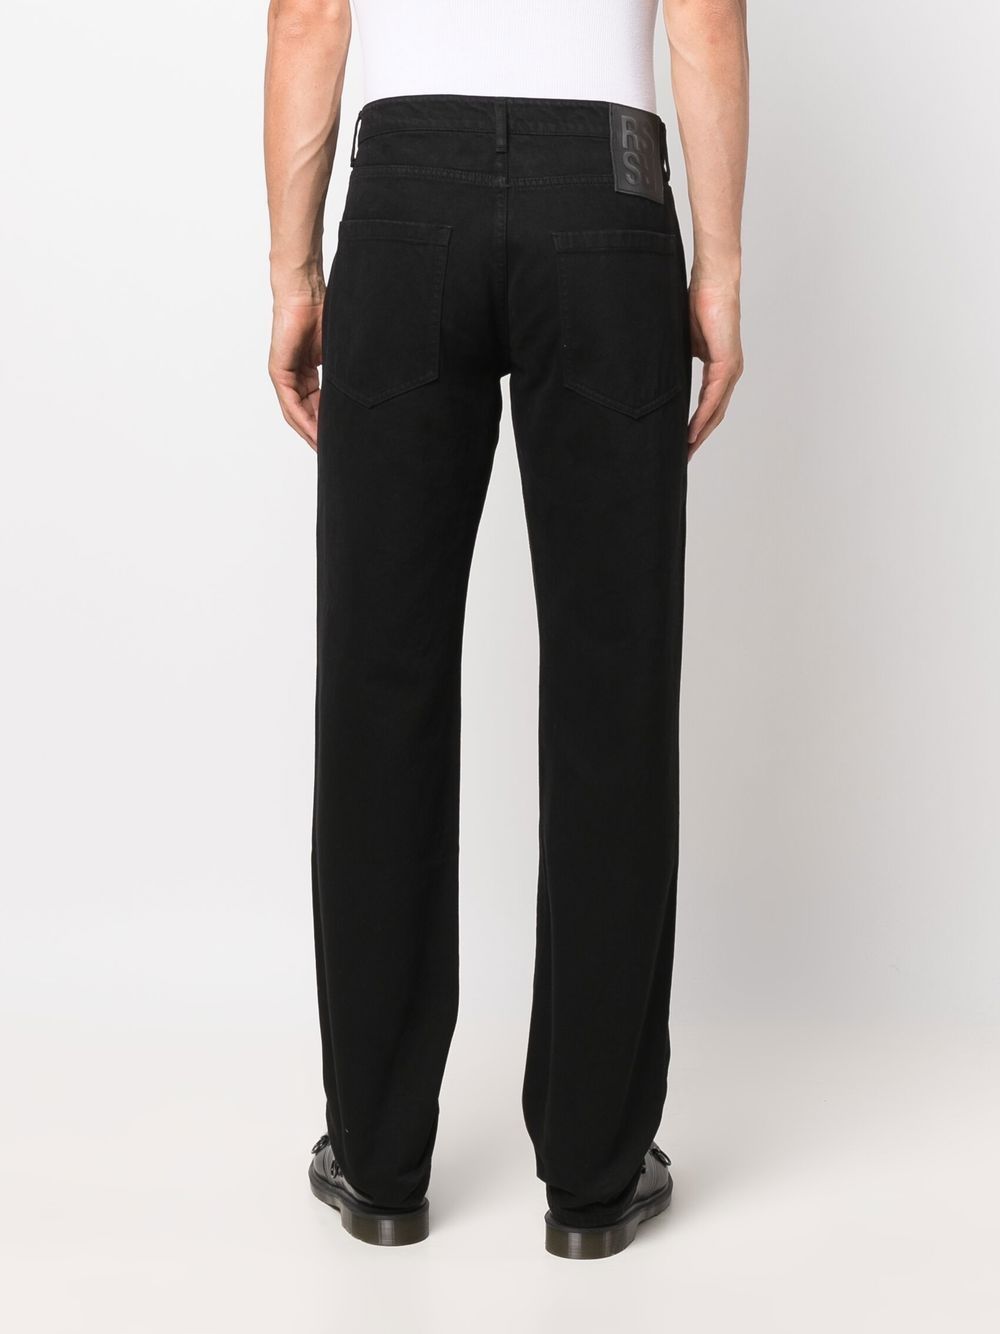 Black mid-rise straight-leg jeans